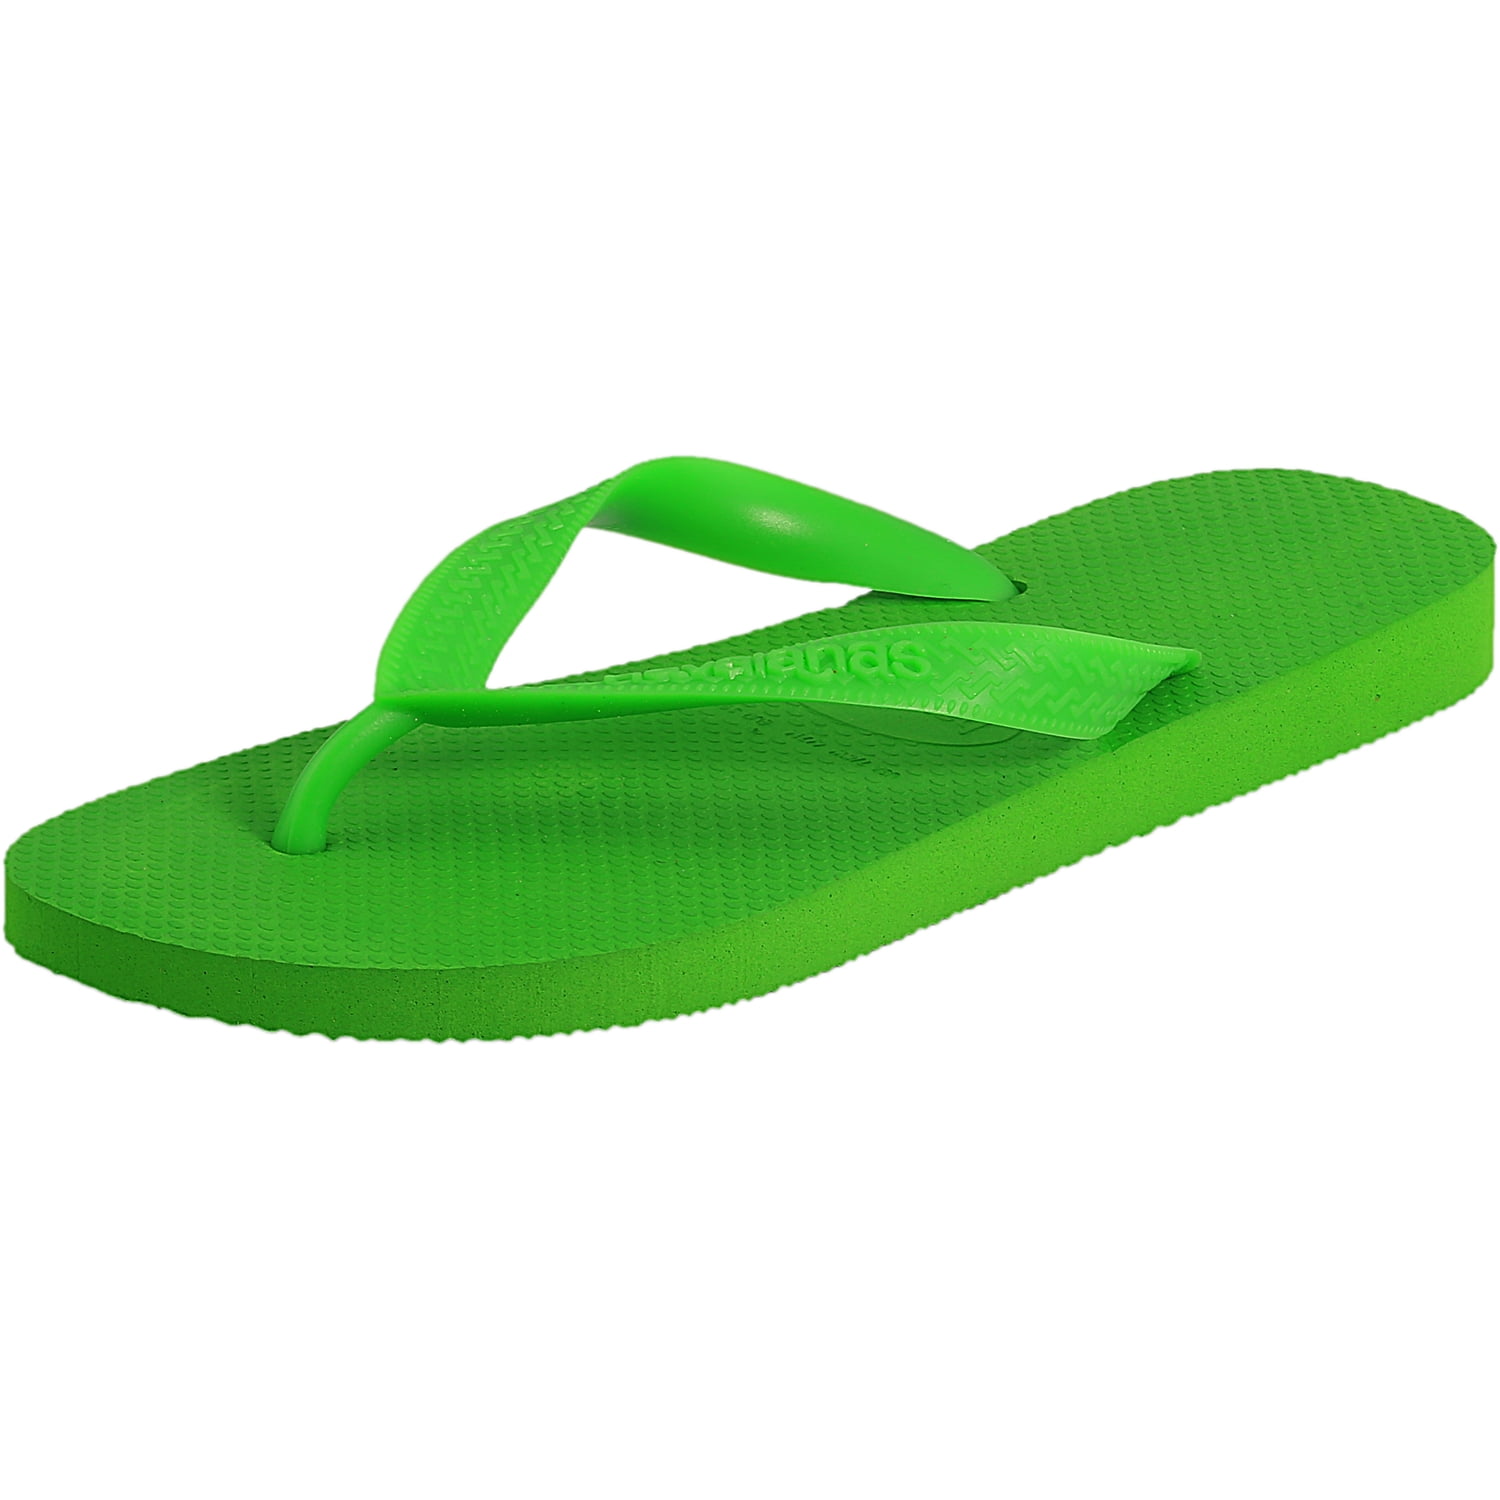 Havaianas H. Top Neon Green Sandal - 8M / 7M - Walmart.com